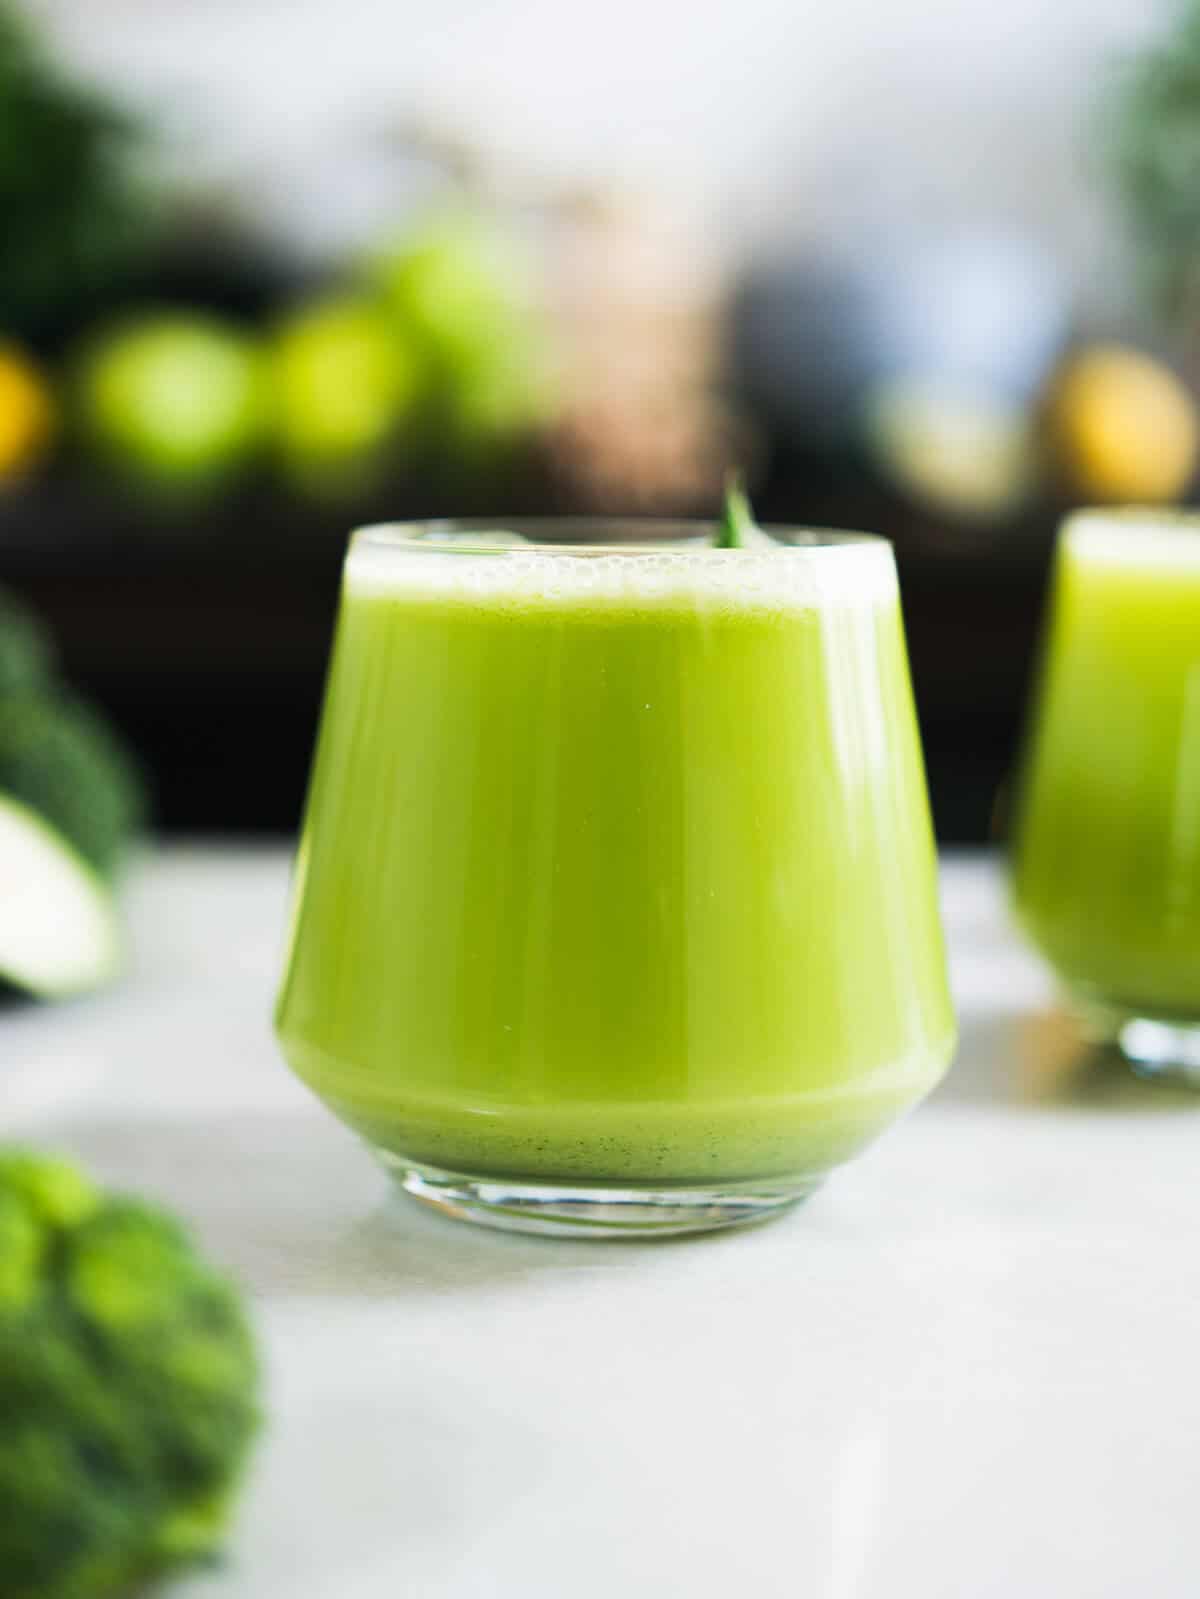 hero image of glass of broccoli green juice served.